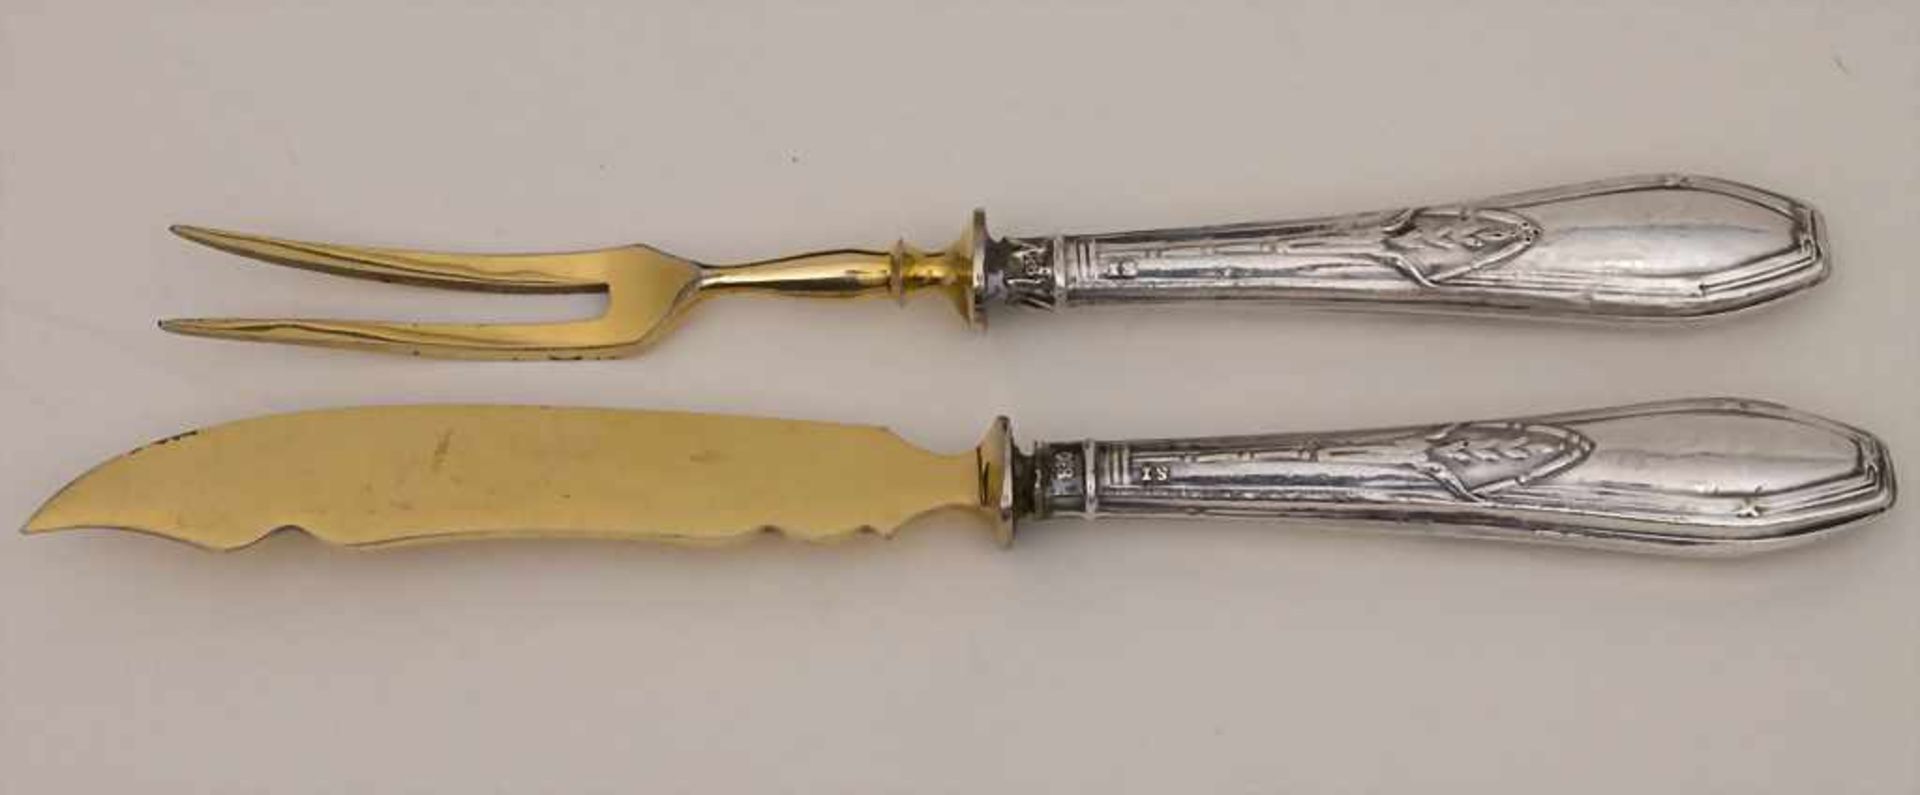 Obstbesteck für 12 Personen / A silver fruit cutlery for 12 persons, um 1900Material: Silber 830, - Bild 2 aus 4